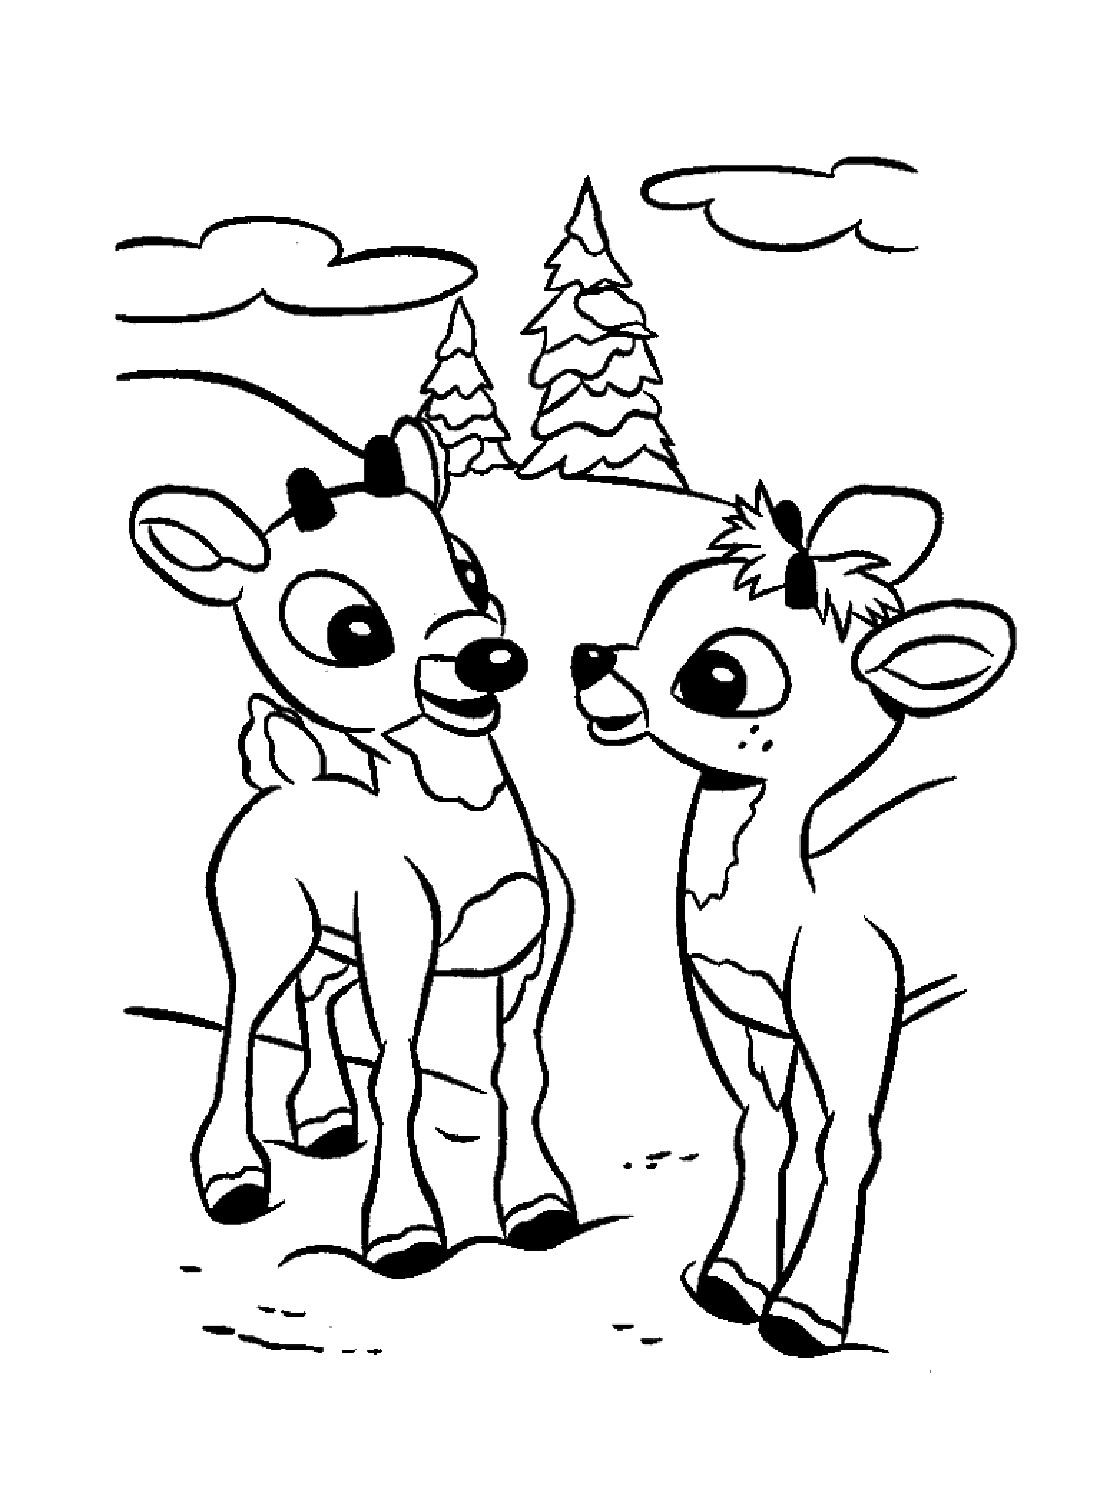 Rudolph e outra rena from Rudolph